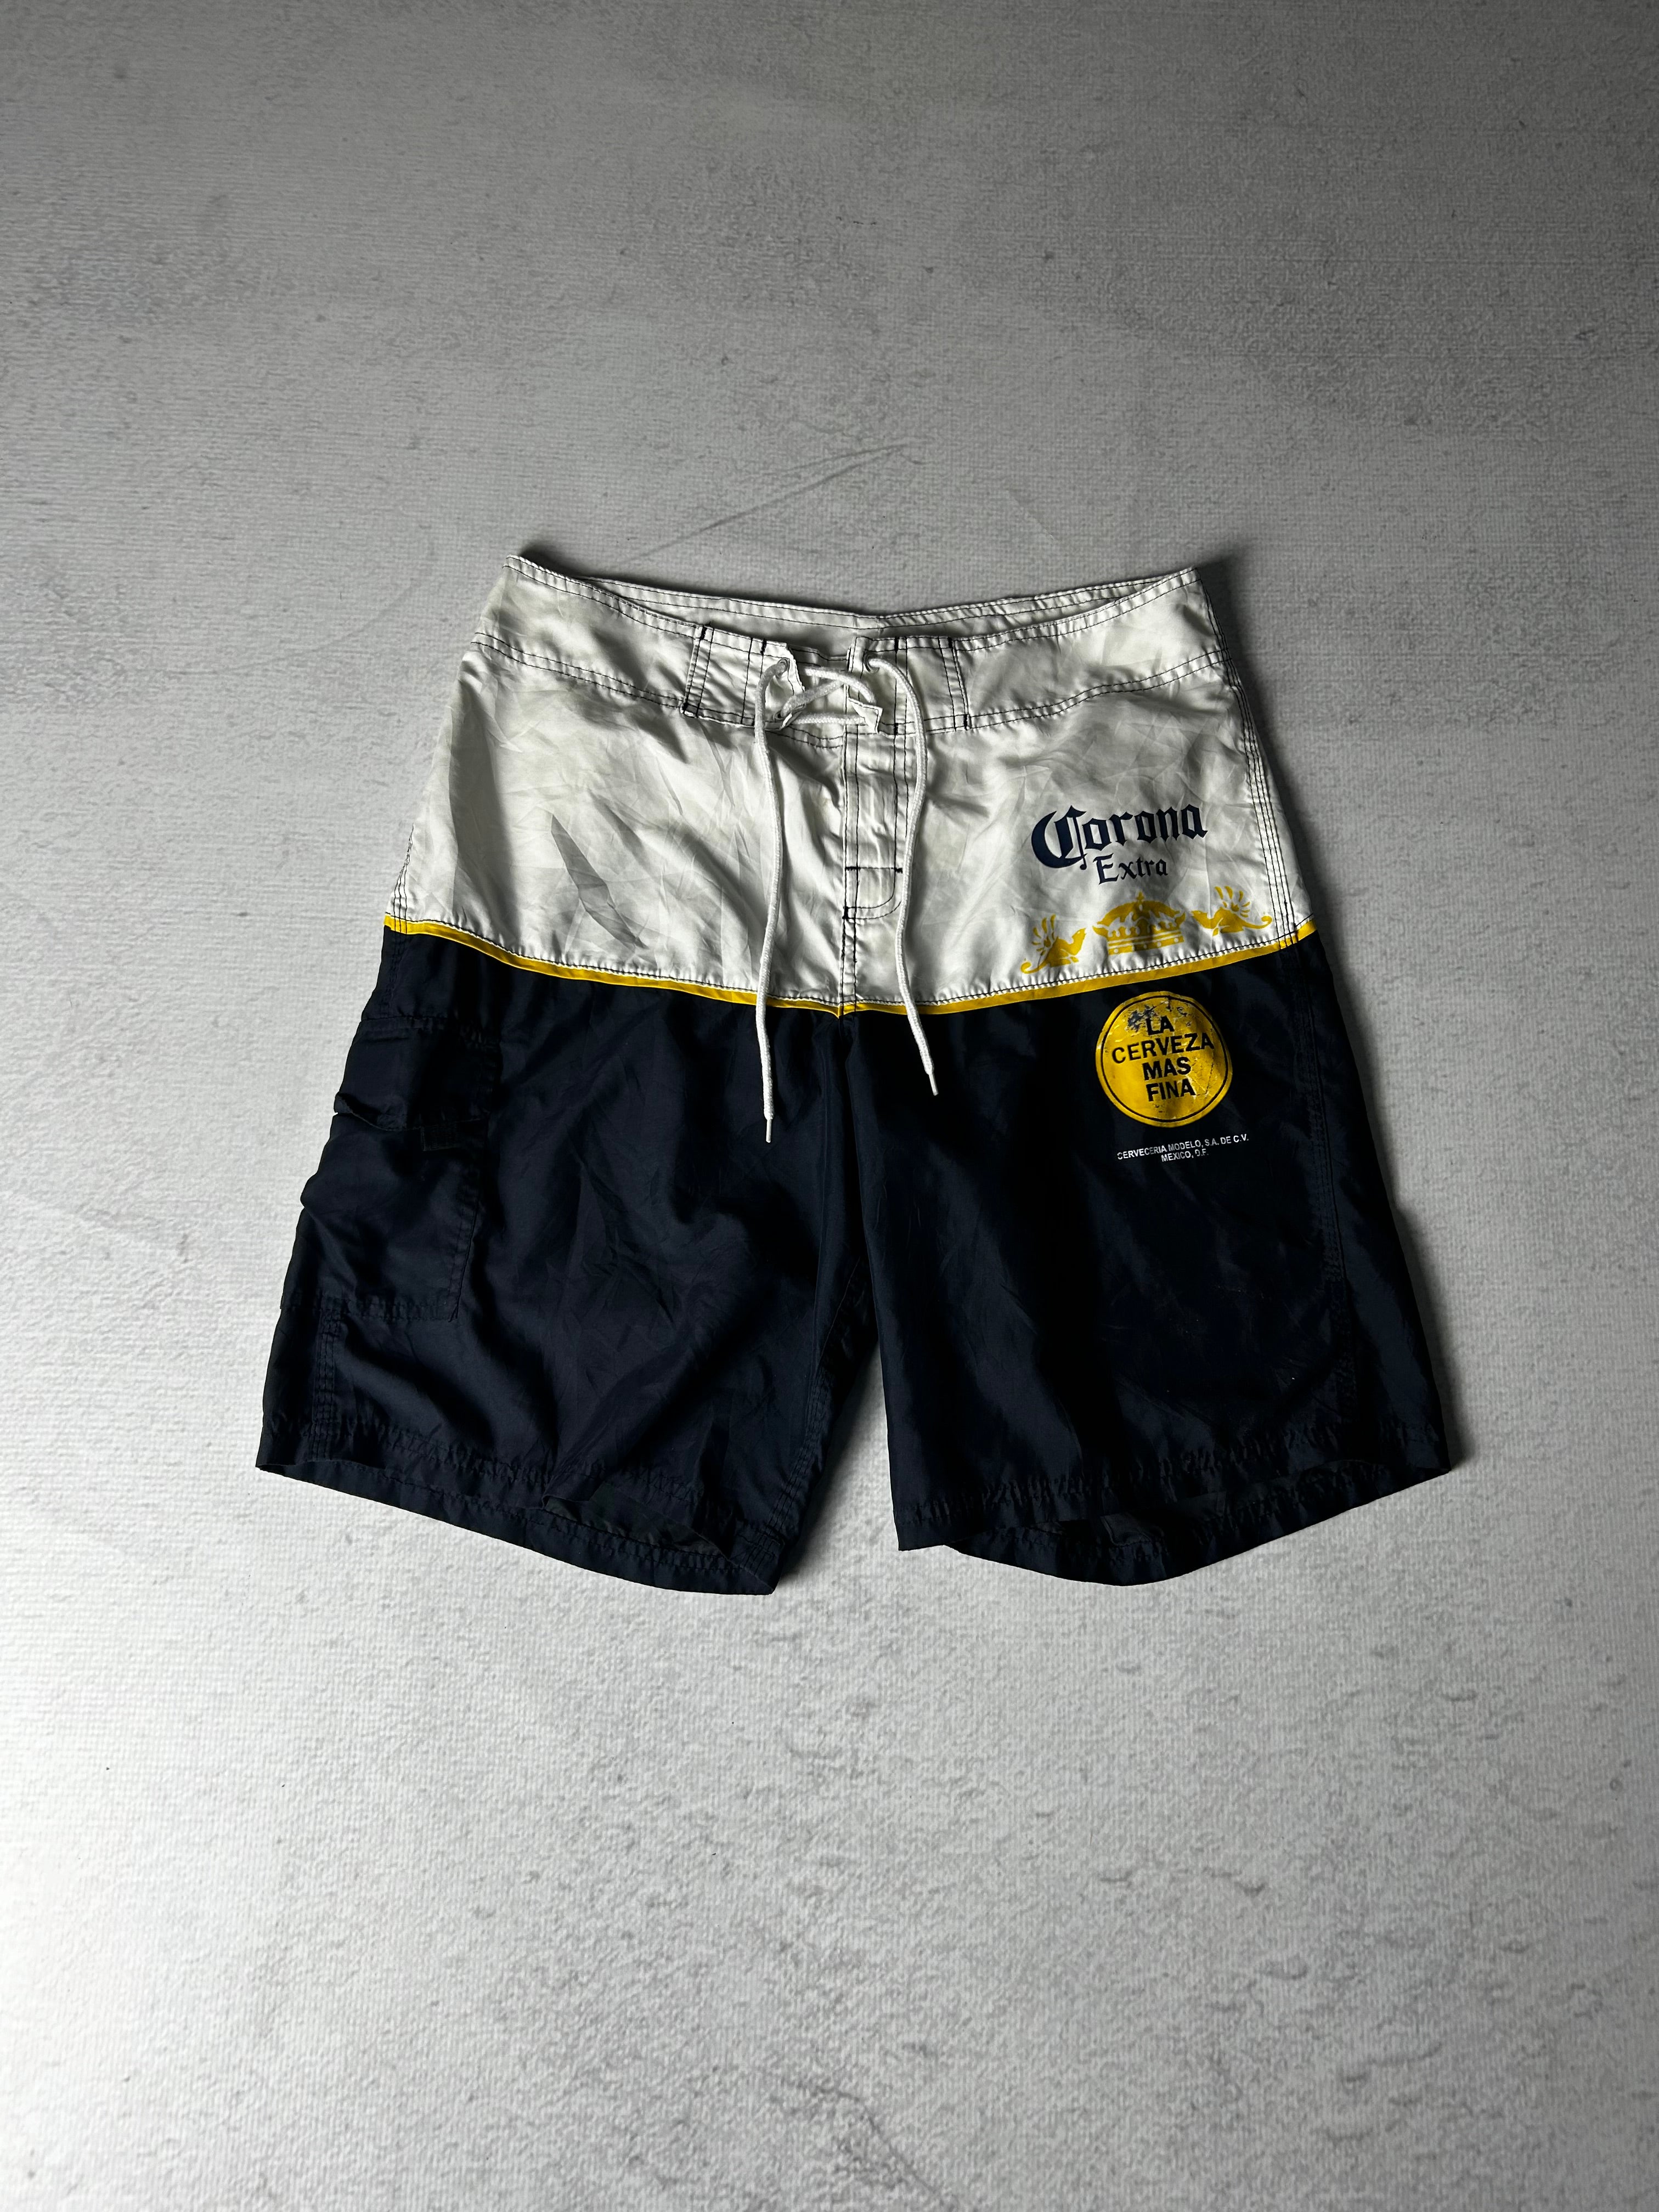 Vintage Corona  Shorts - Men's Large